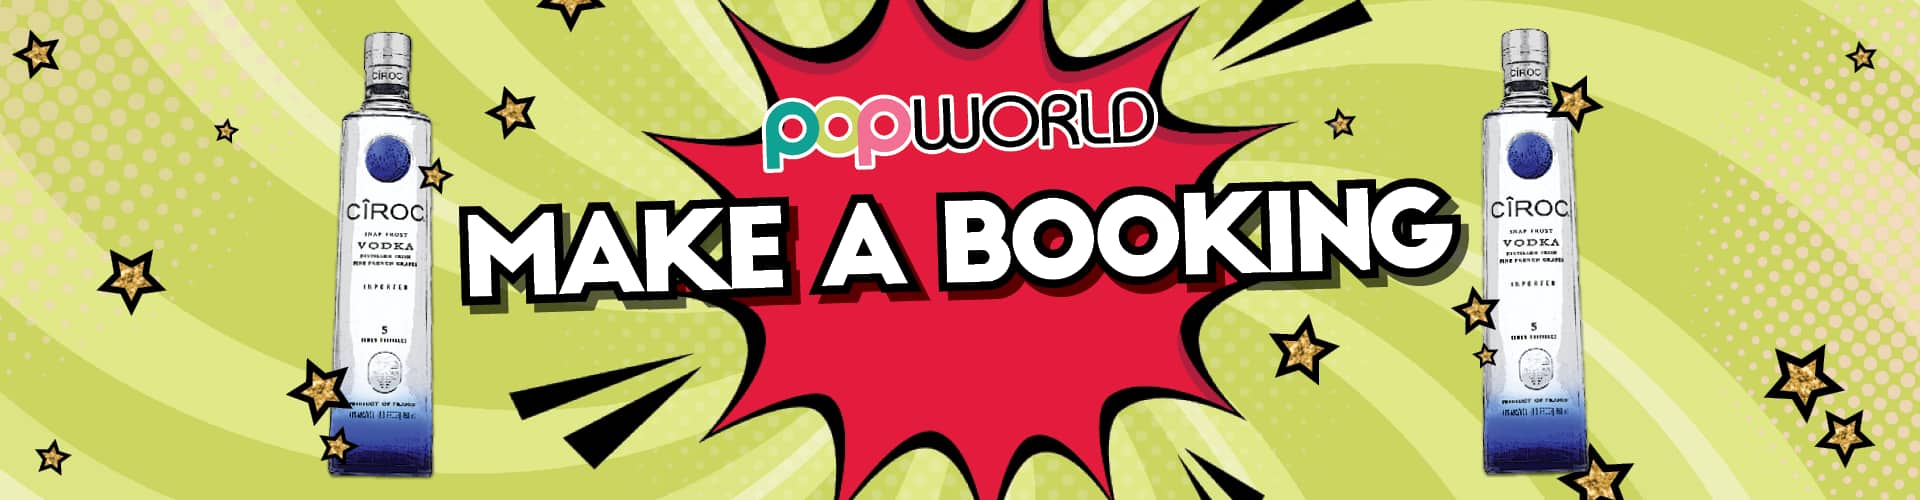 Make a Booking at Popworld Leeds